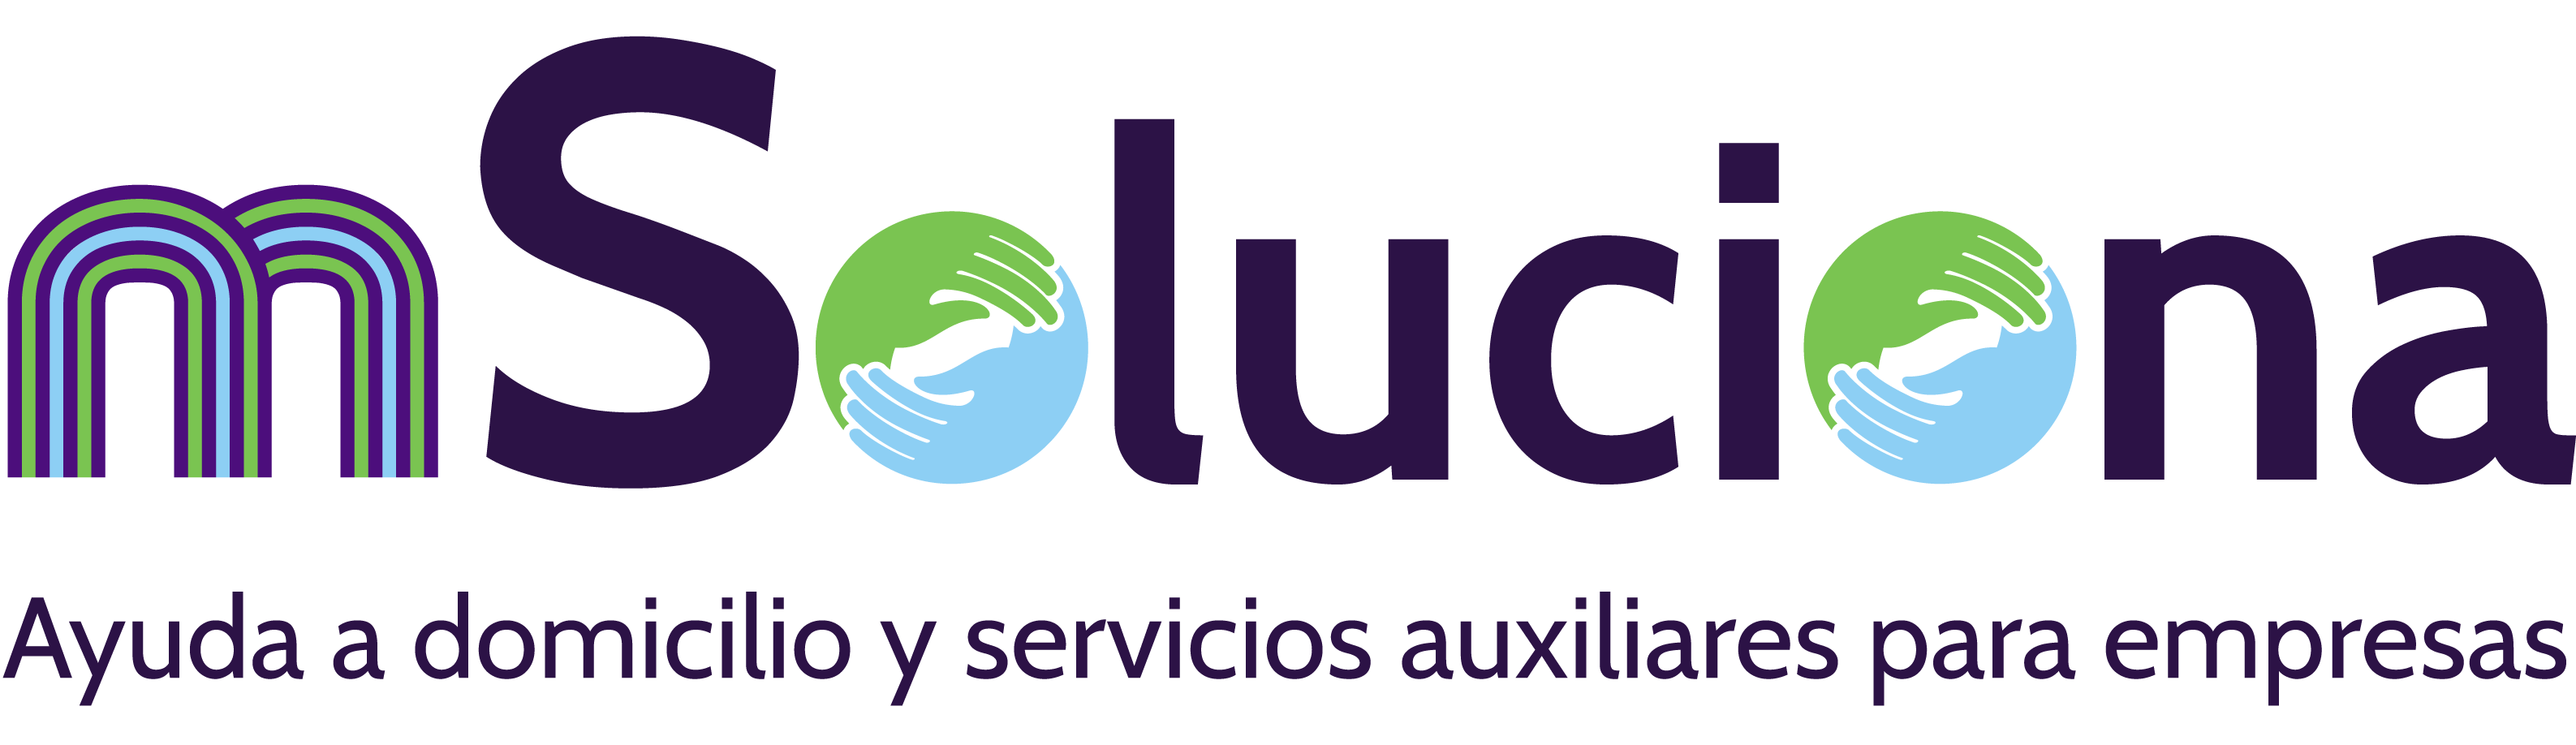 Logo MSoluciona Granada - Empresarios Granada